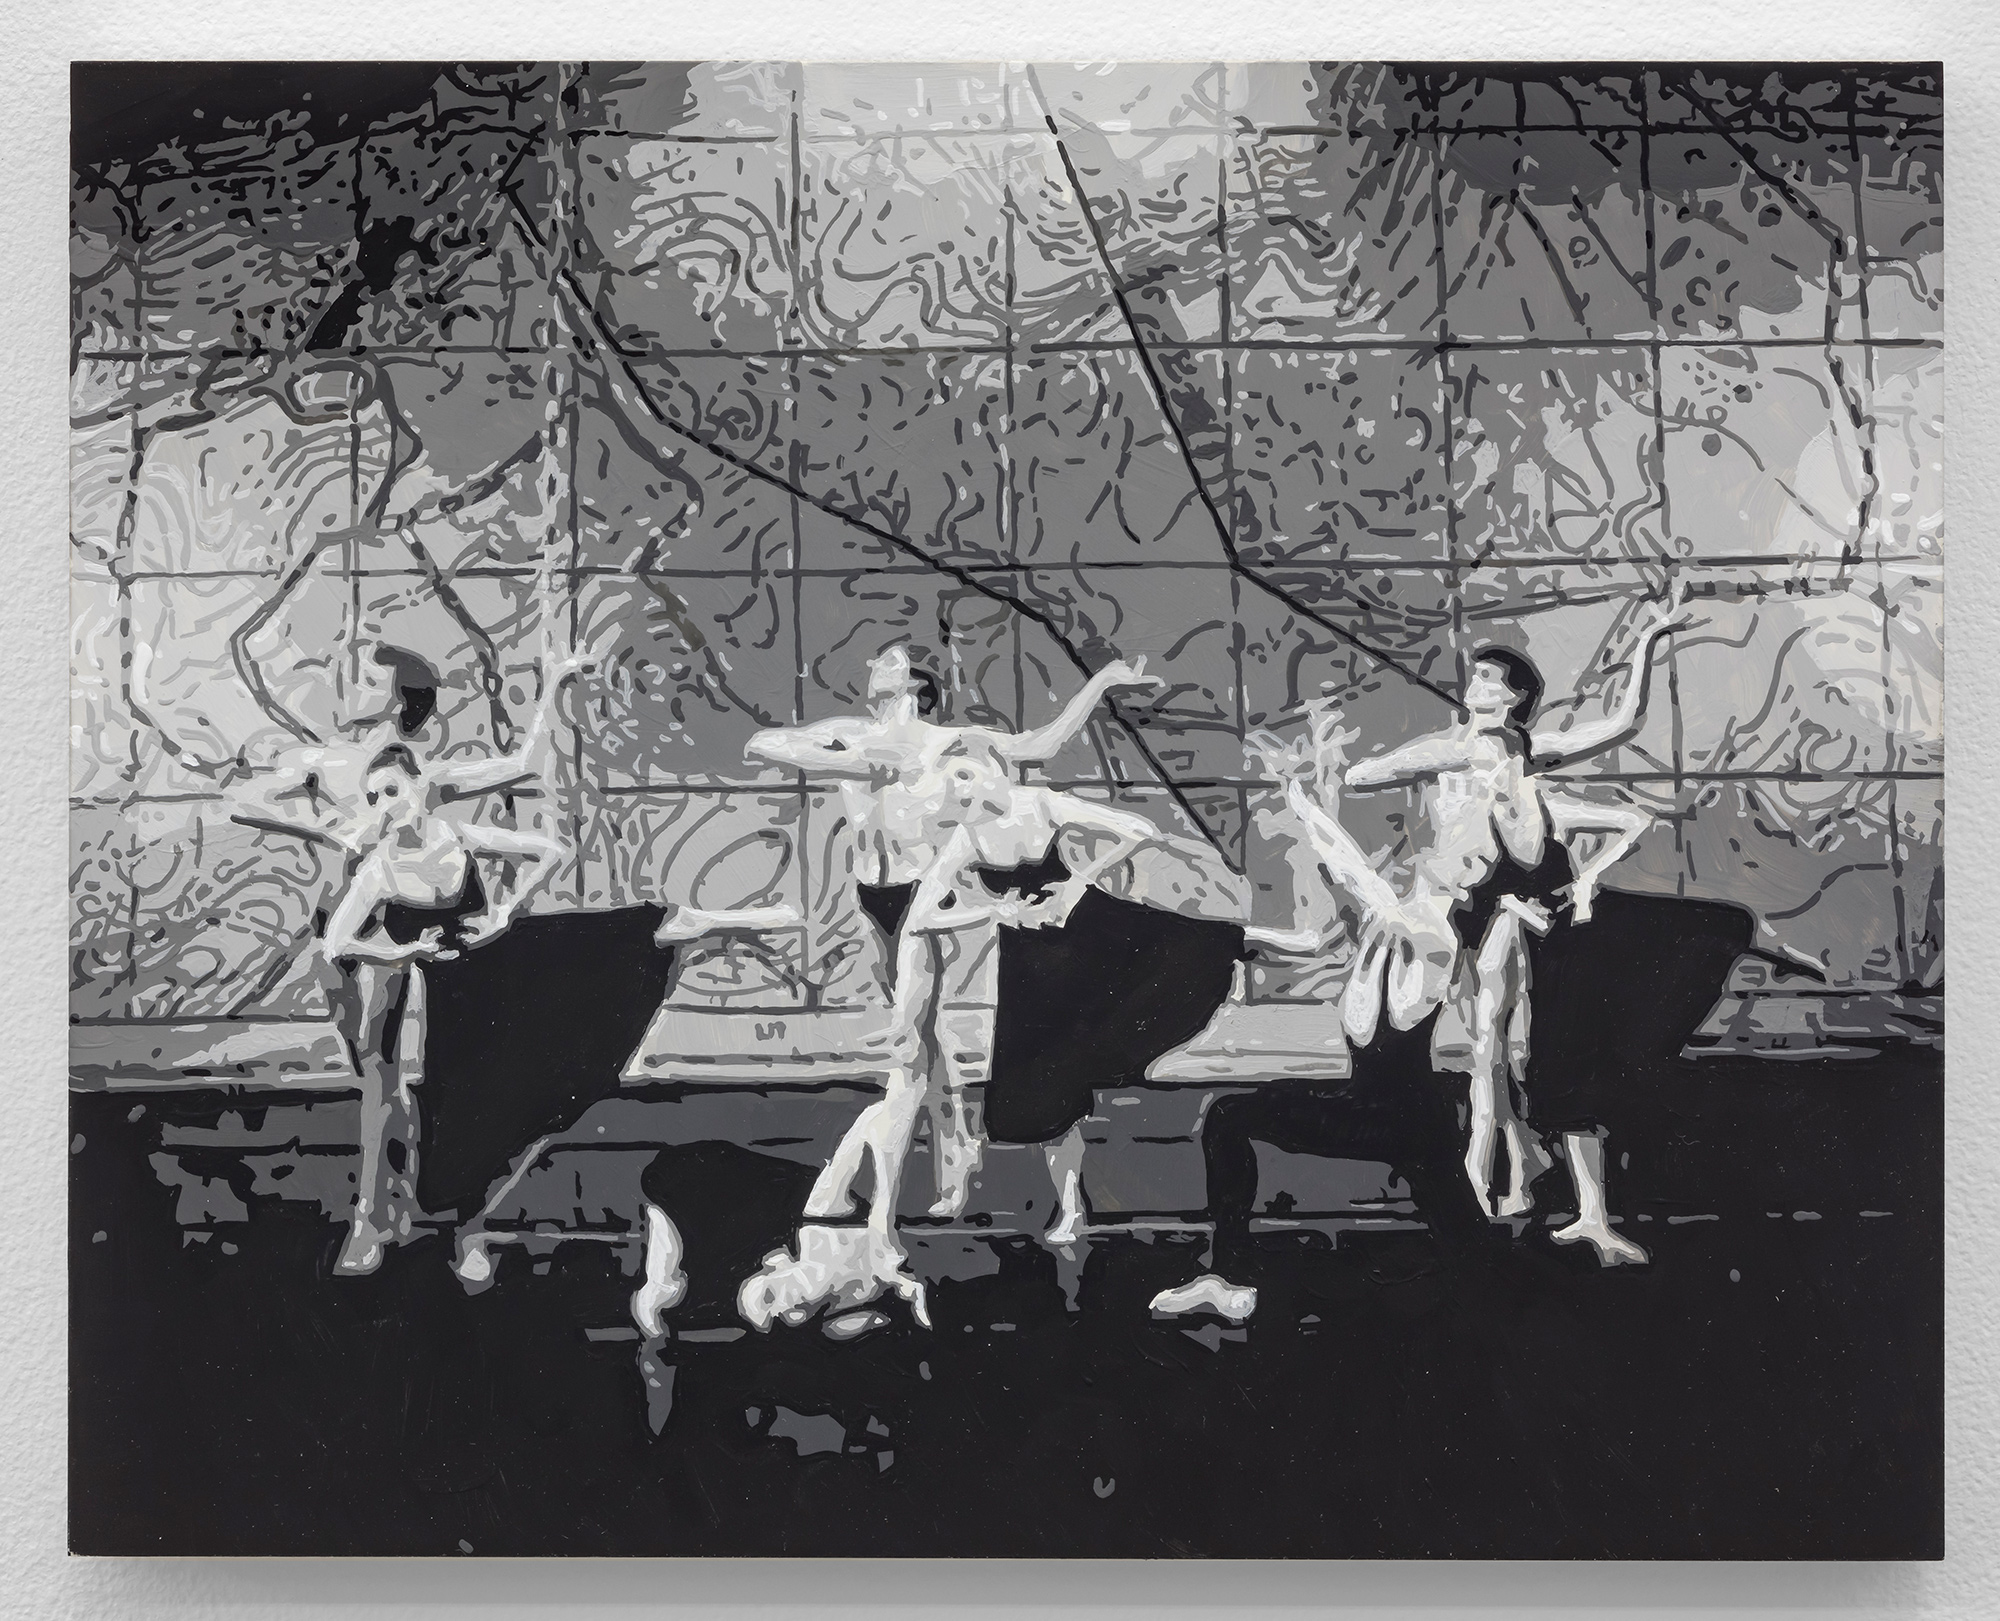  Dorian FitzGerald,  Bat-Dor Dance Company, Joyce Theatre, New York, 1983,  2019, holbein acryla gouache on board, 8 x 10 inches 